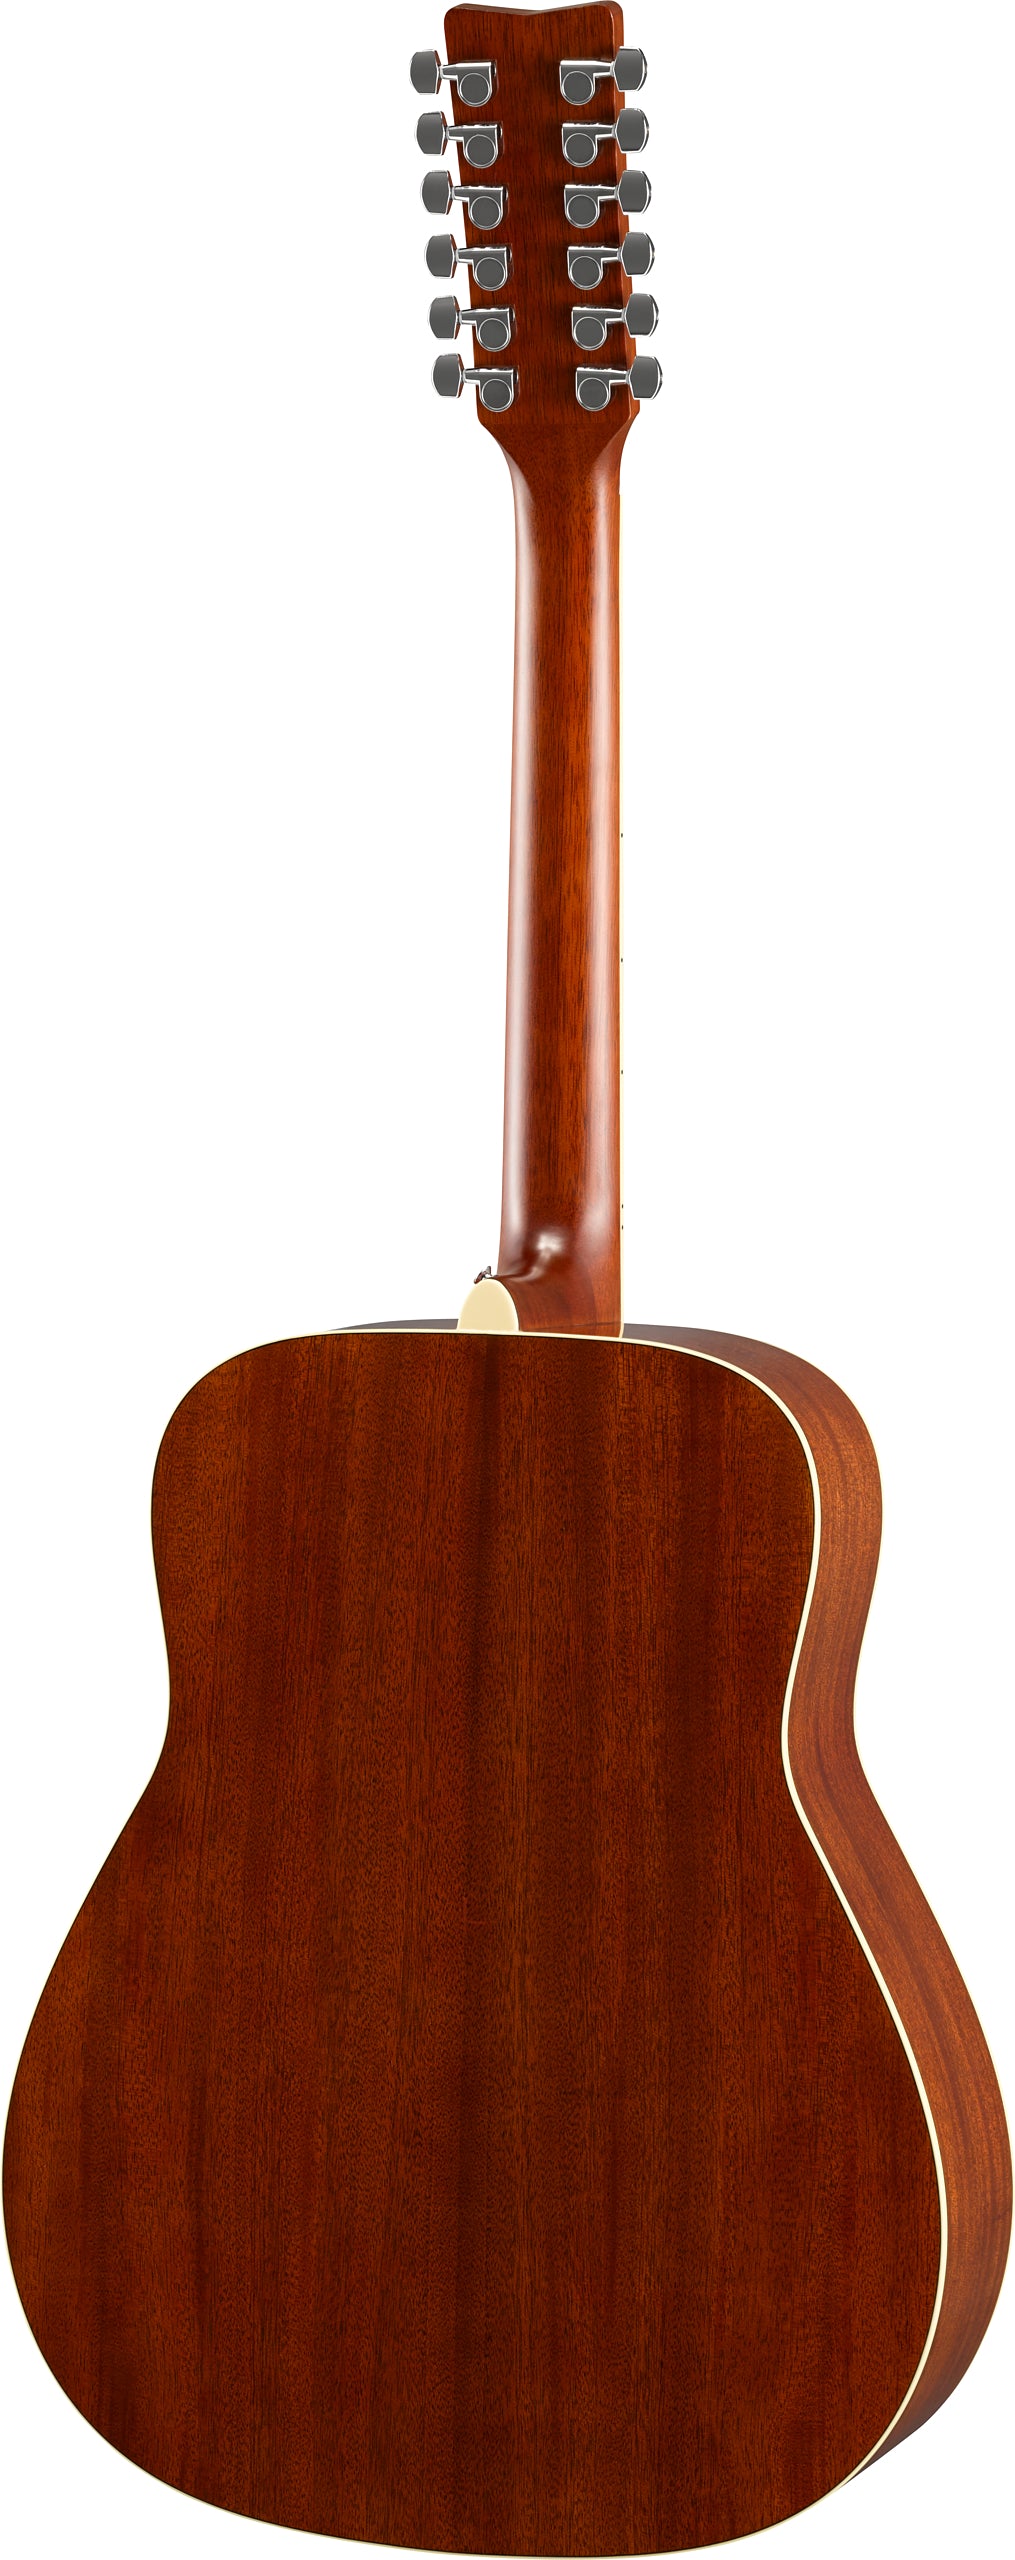 Yamaha FG820-12 Acoustic Guitar 12 String